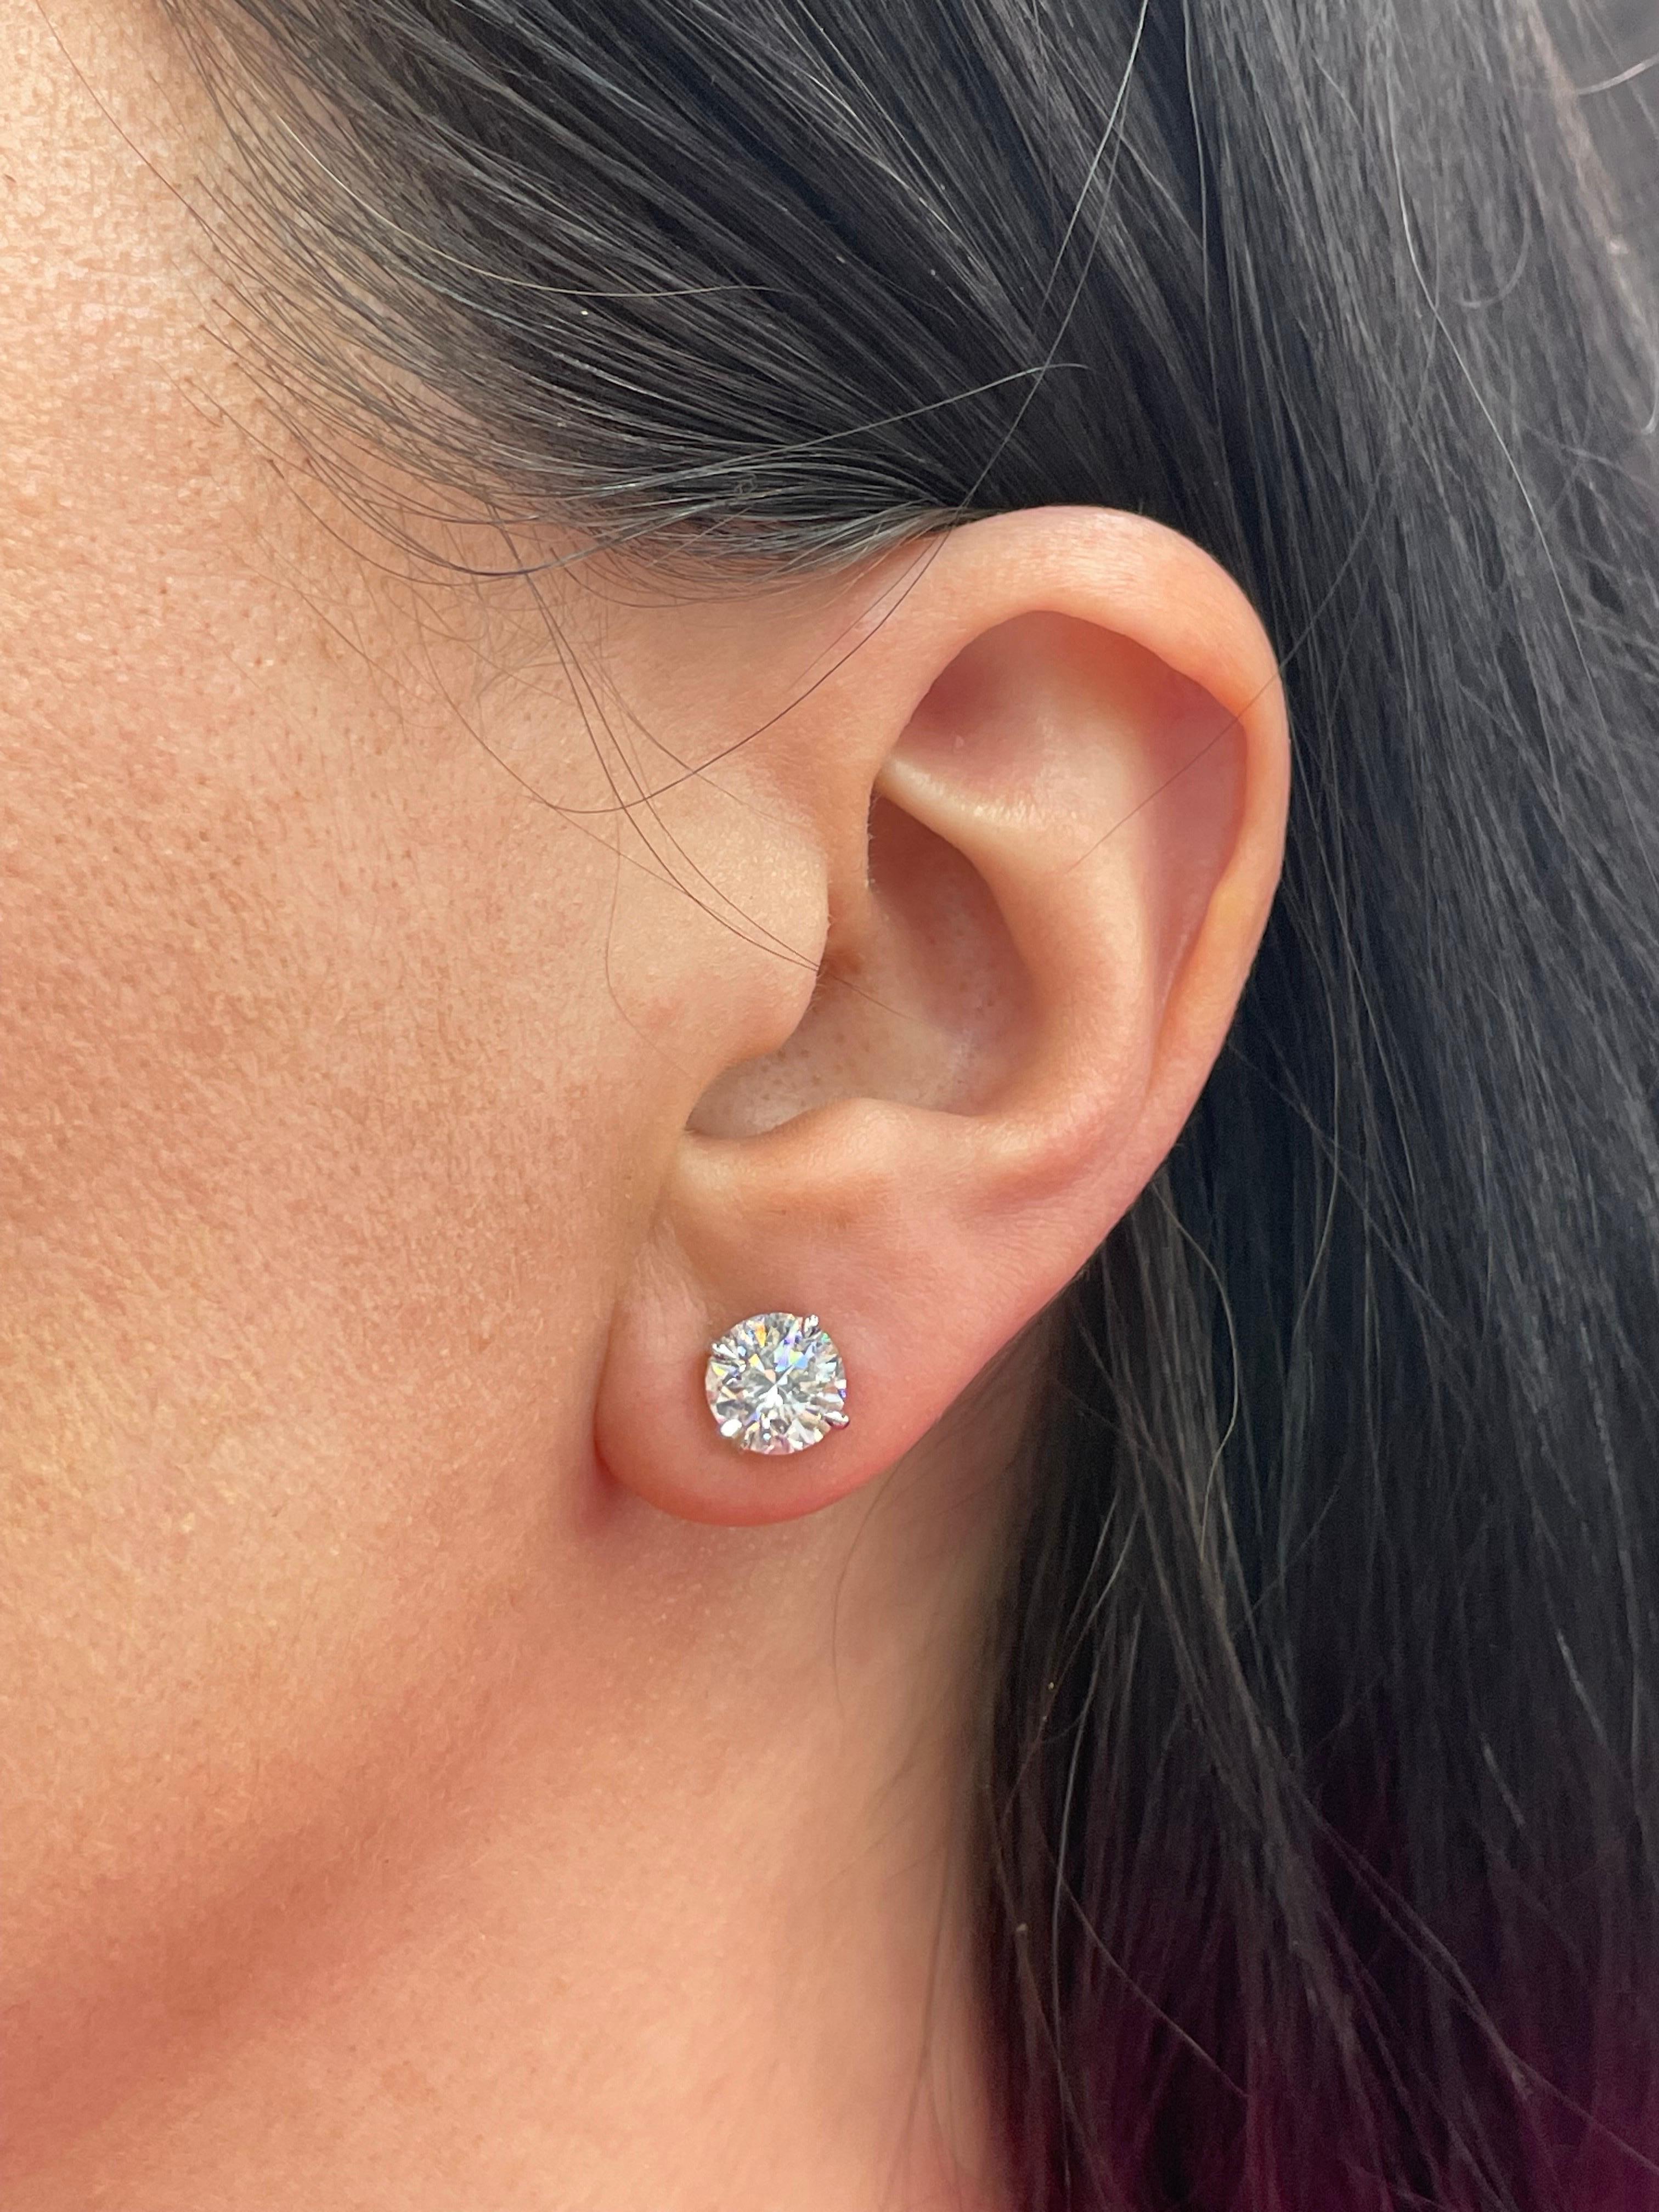 10ct diamond earrings